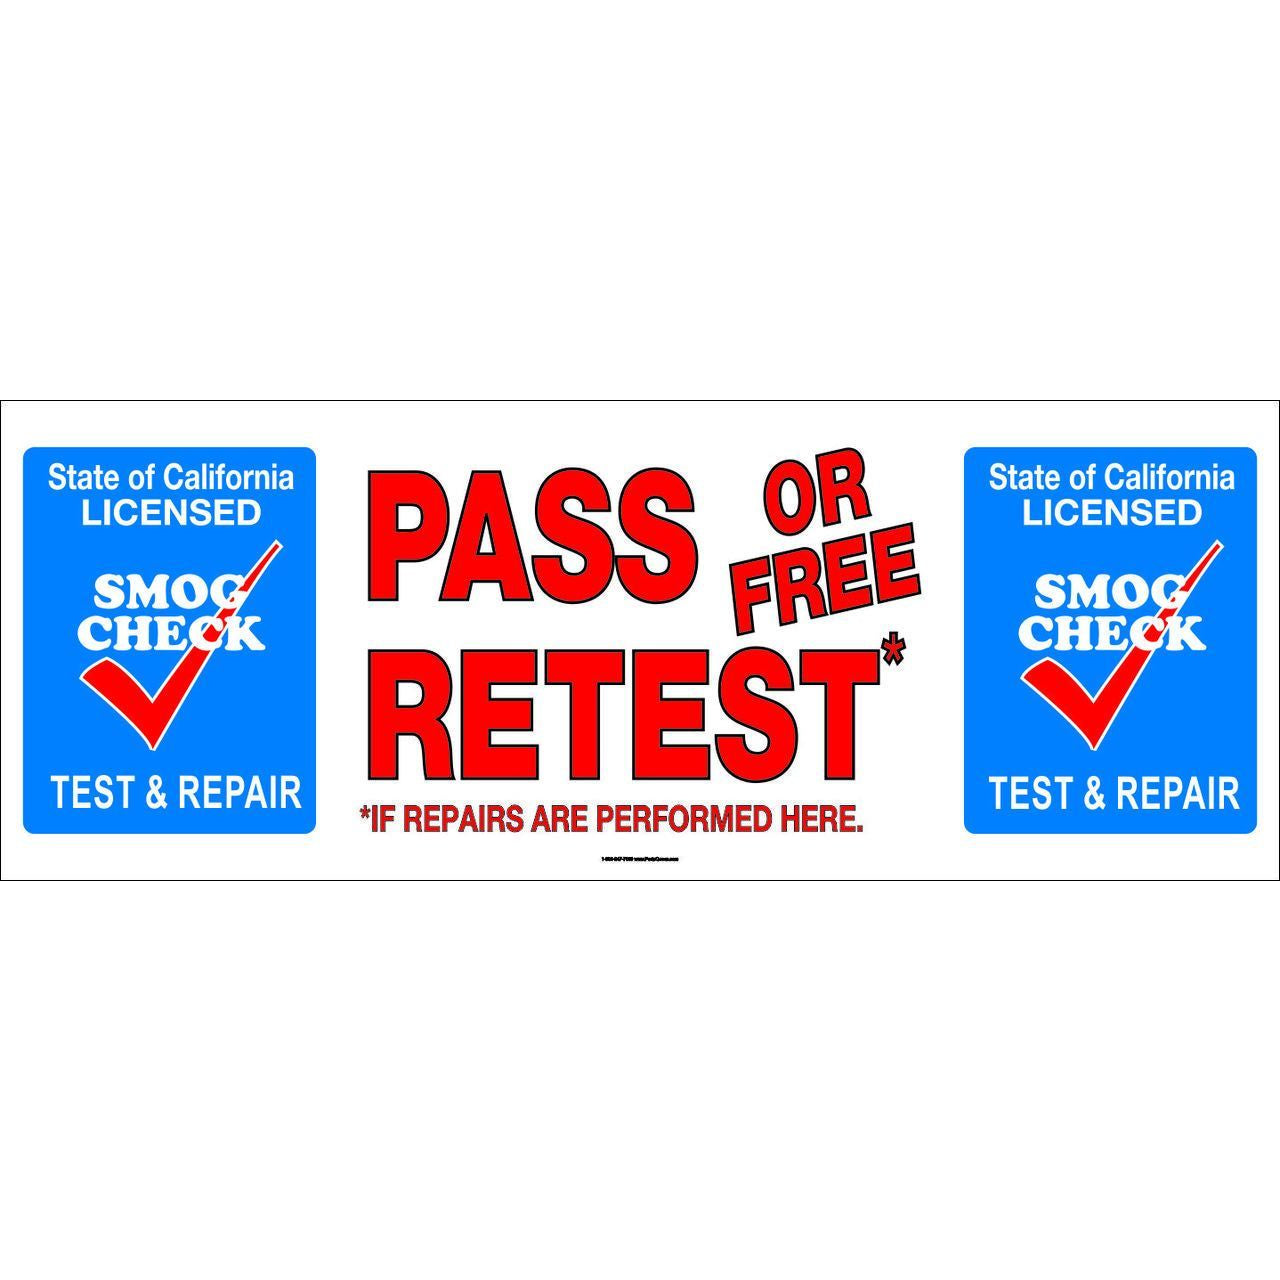 PASS OR FREE RETEST SB-9 !!!